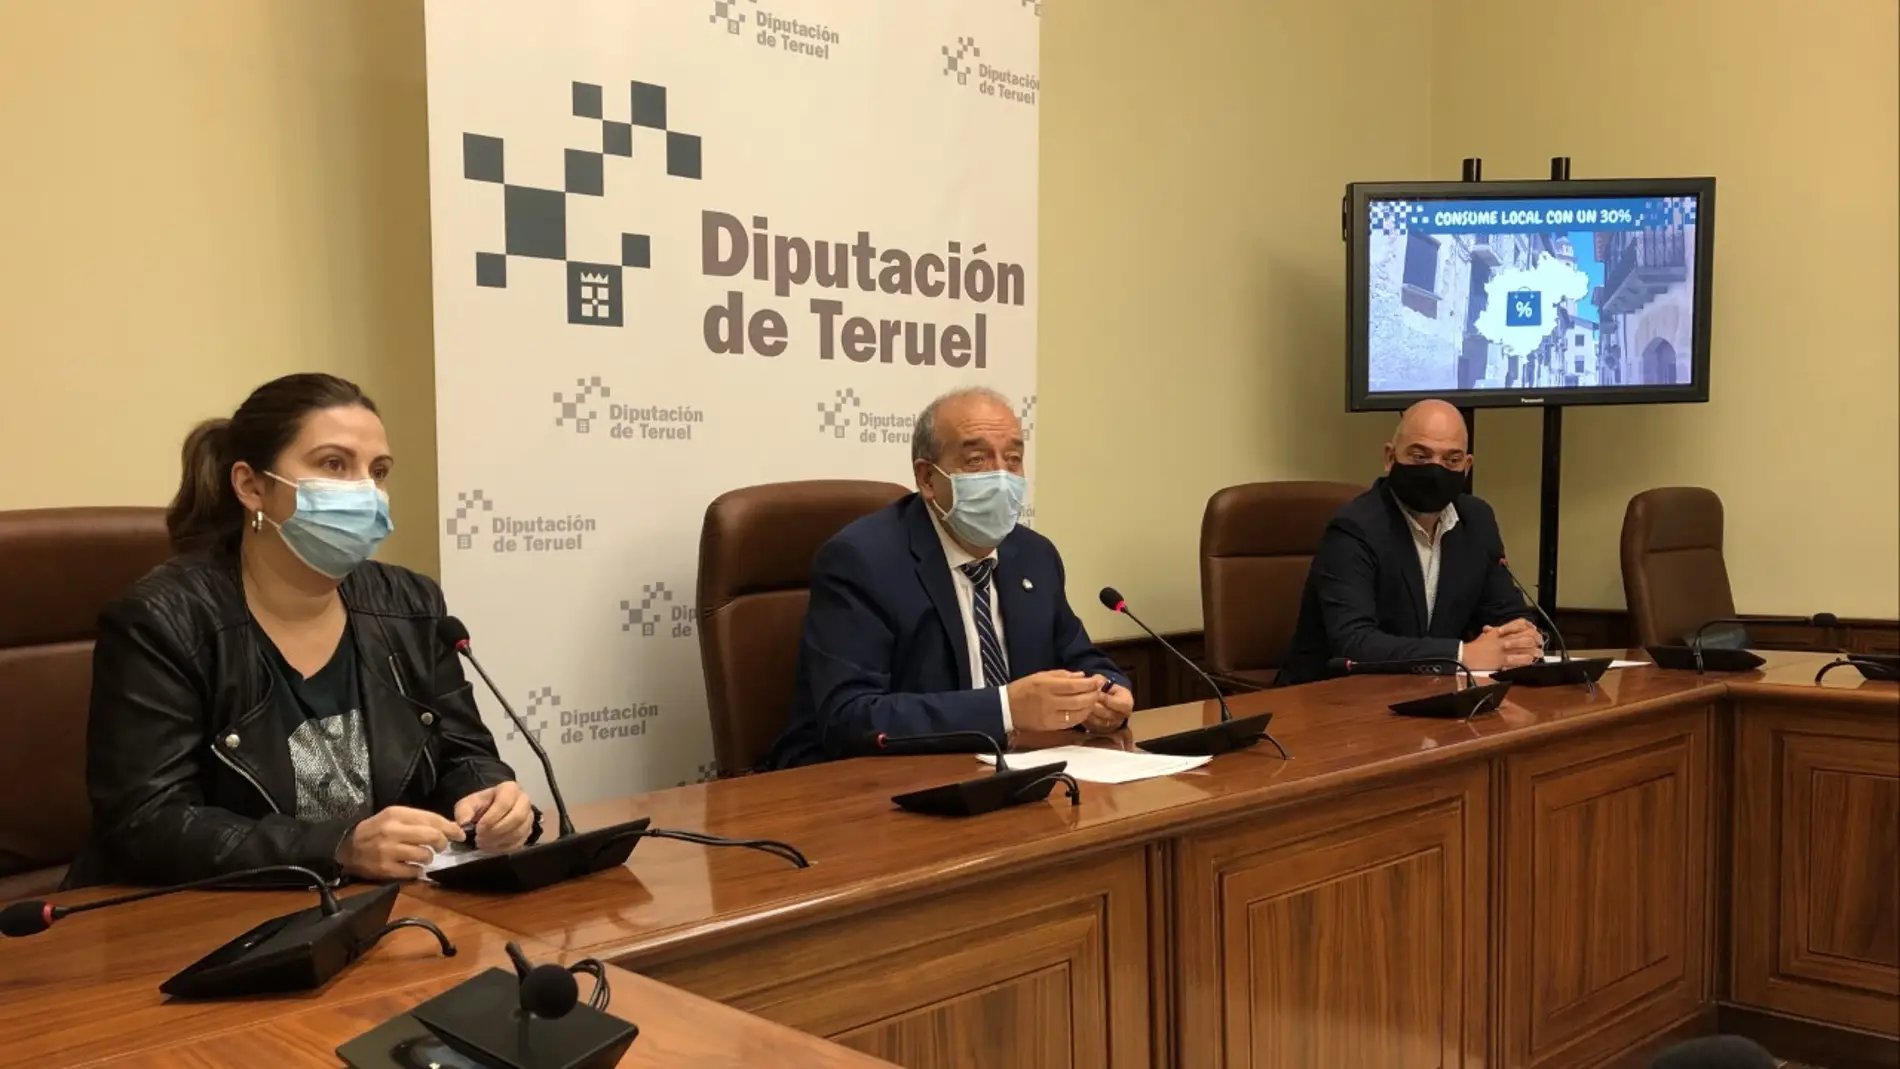 Diputación de Teruel y Cámara de Comercio han firmado un convenio de colaboración para sacar adelante este programa